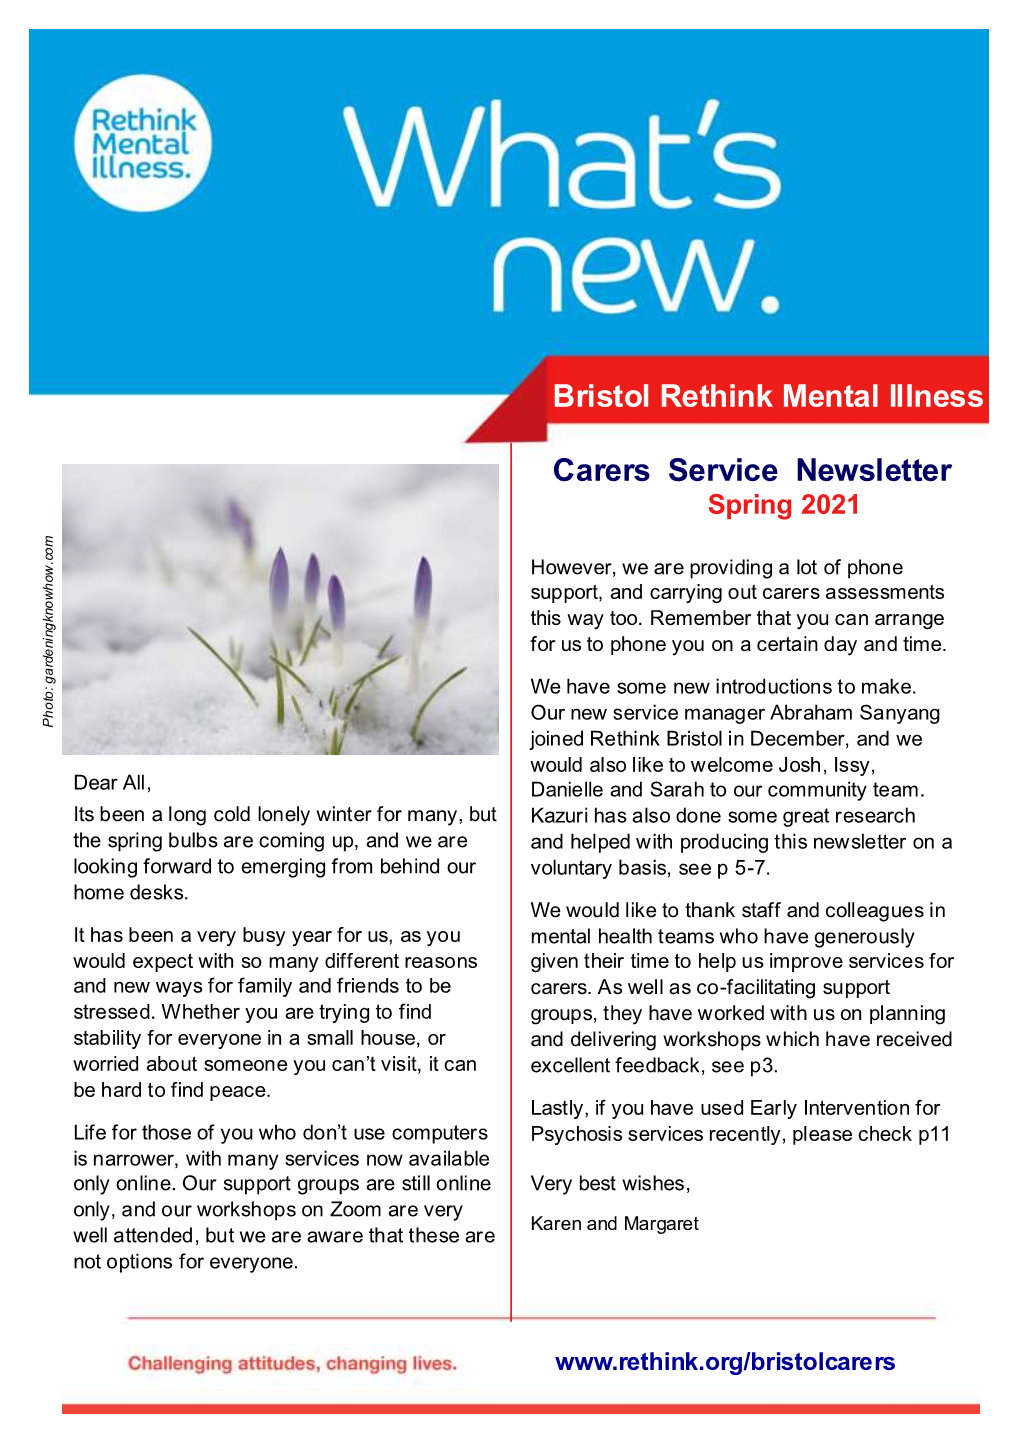 Bristol Rethink Mental Illness Carers Service Newsletter